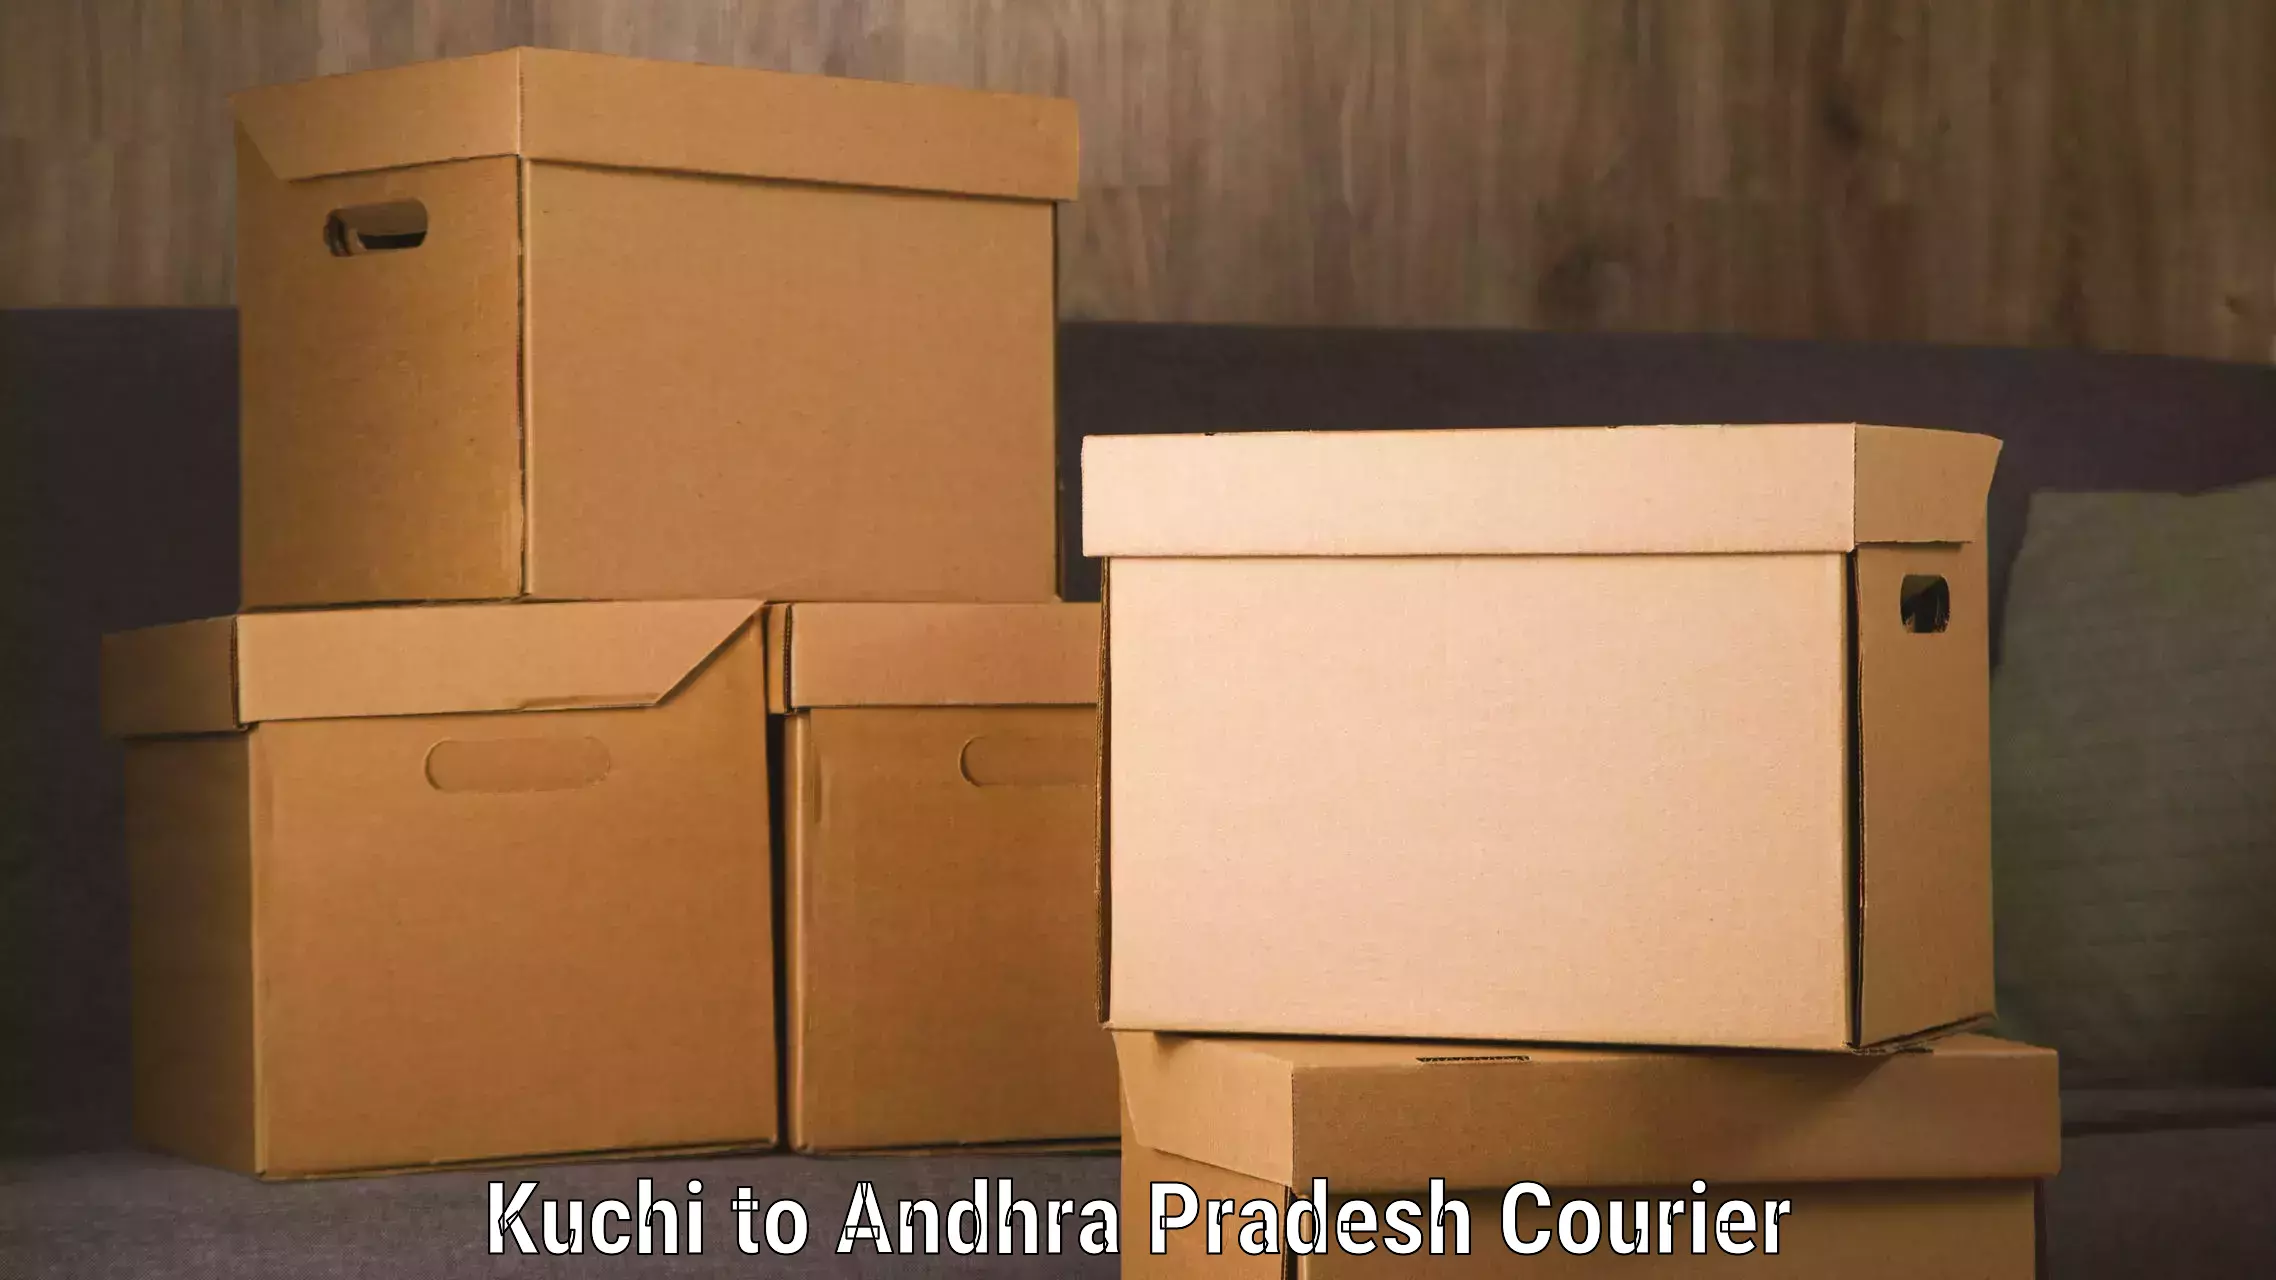 Quick parcel dispatch Kuchi to Tripuranthakam